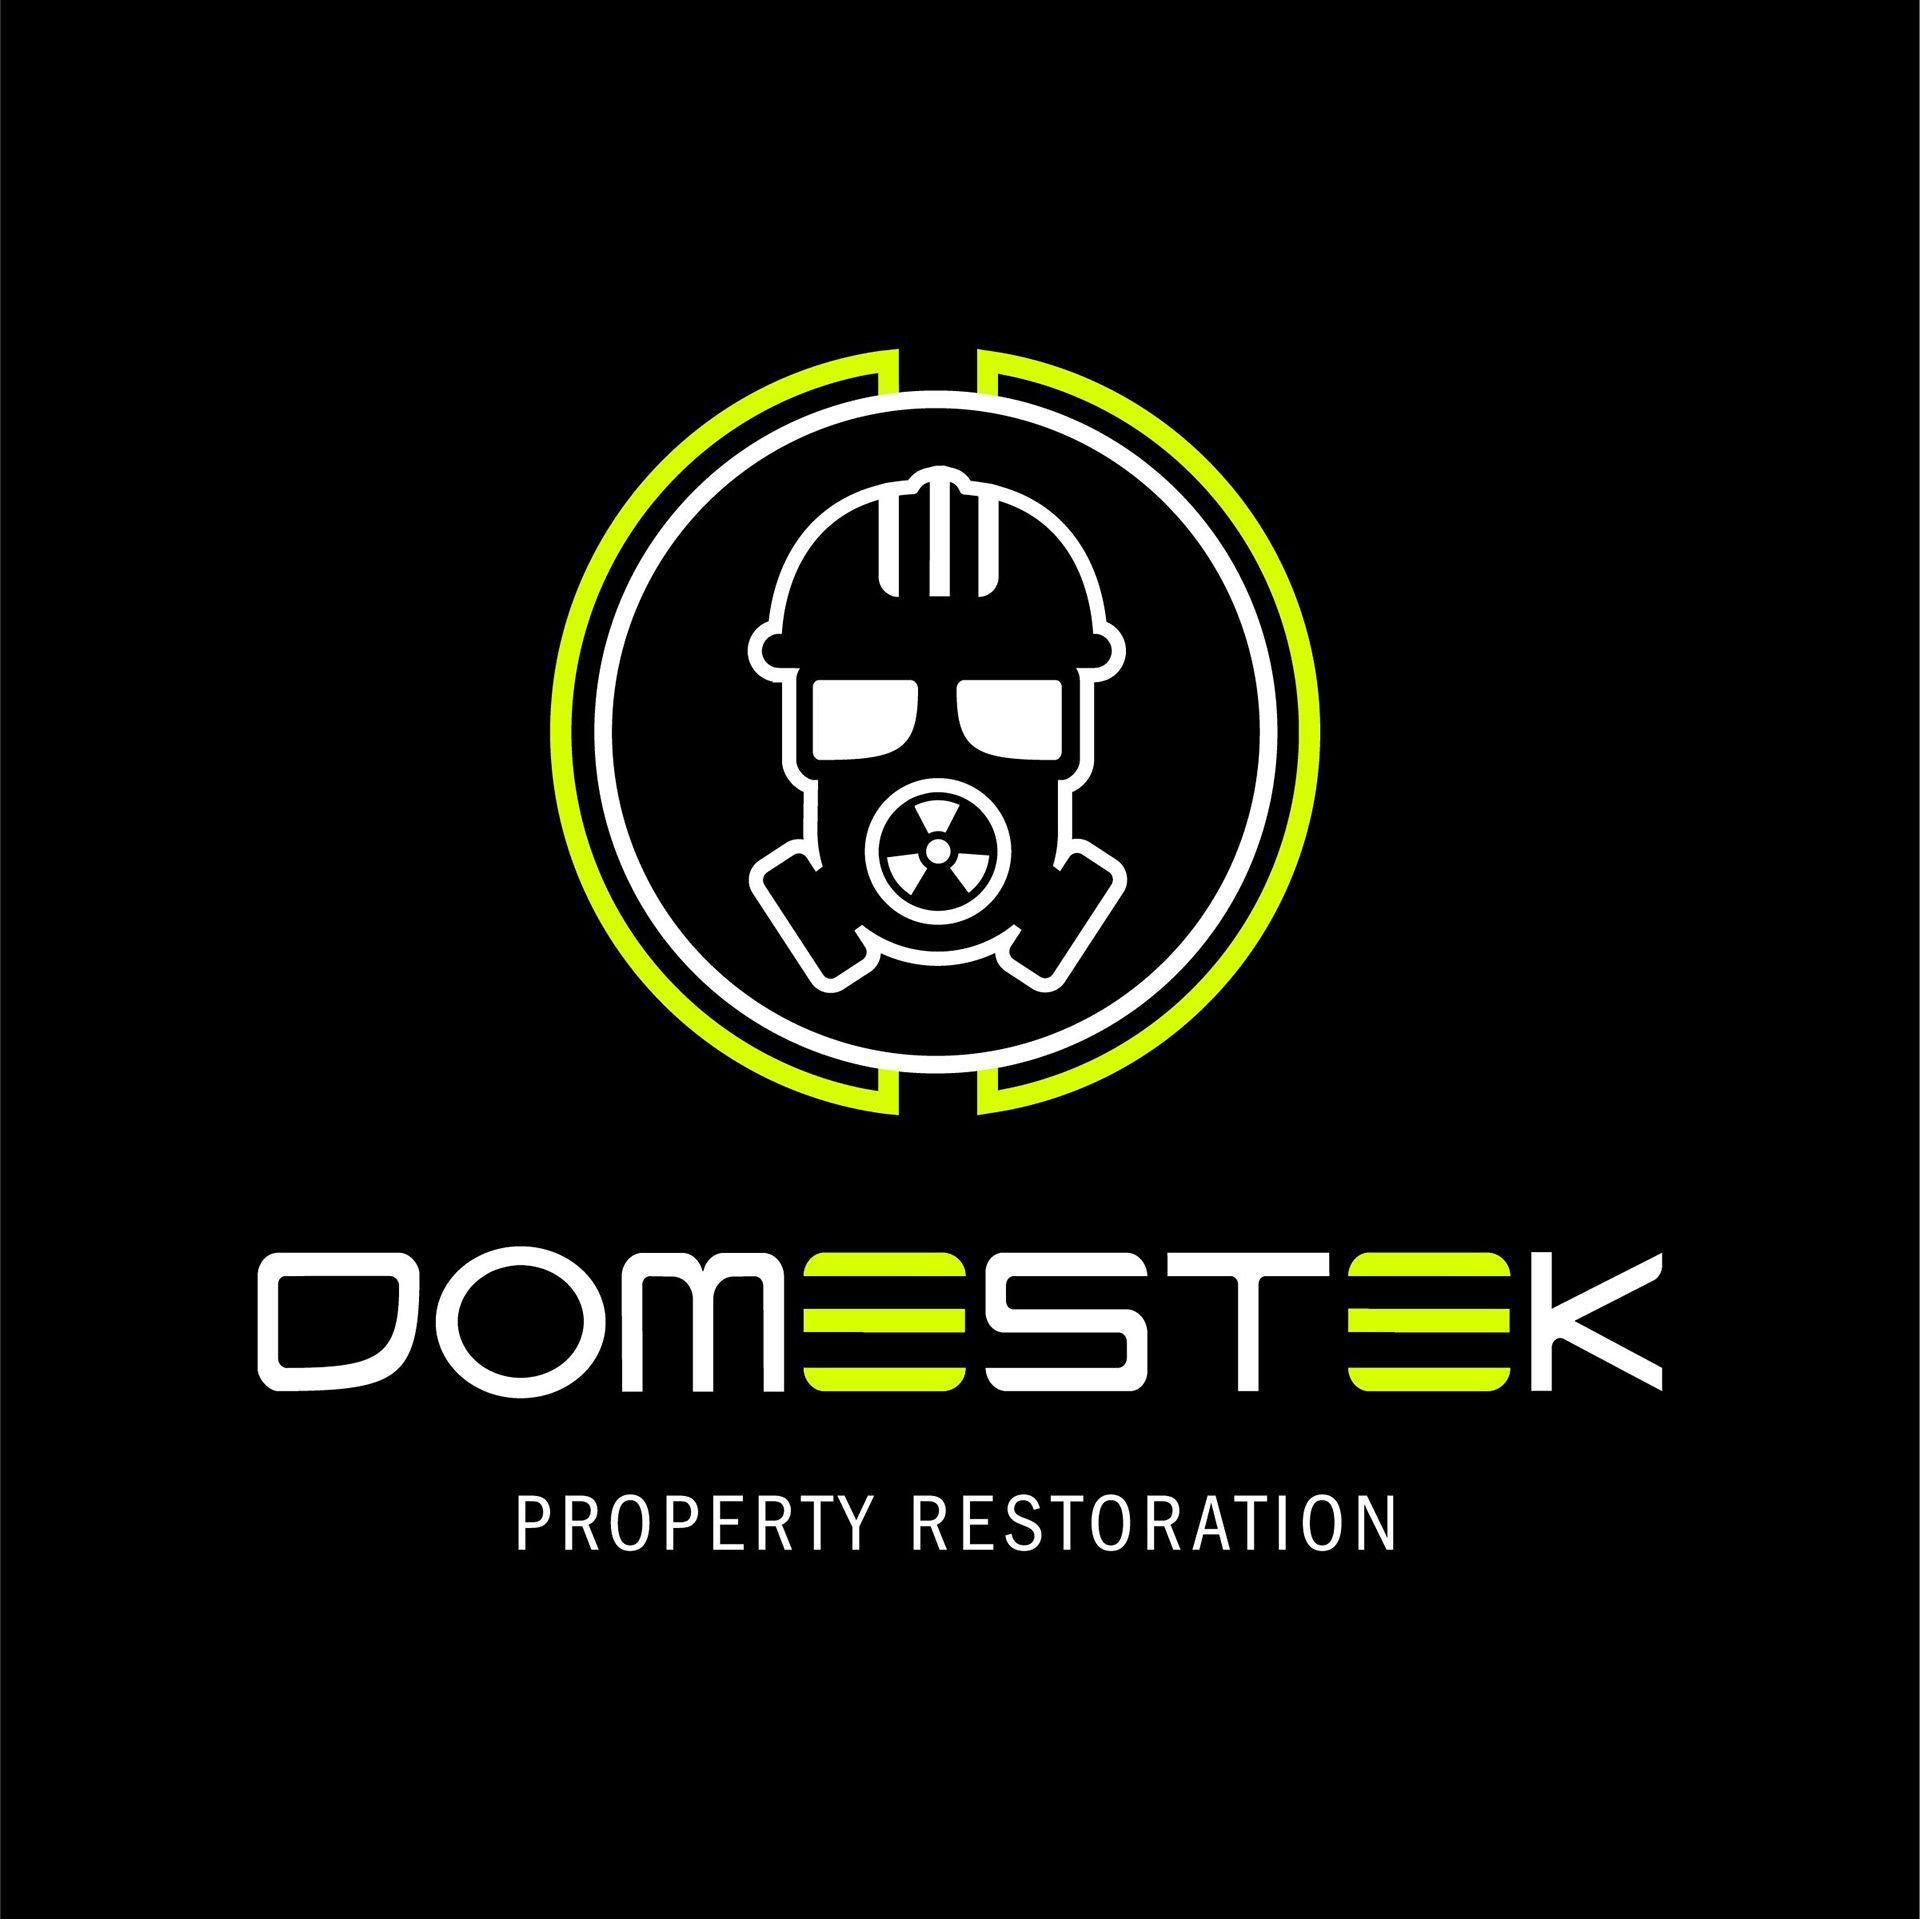 Green and Black Logo - Naomi Hia - Domestek Logo and Vehicle Wrap Design